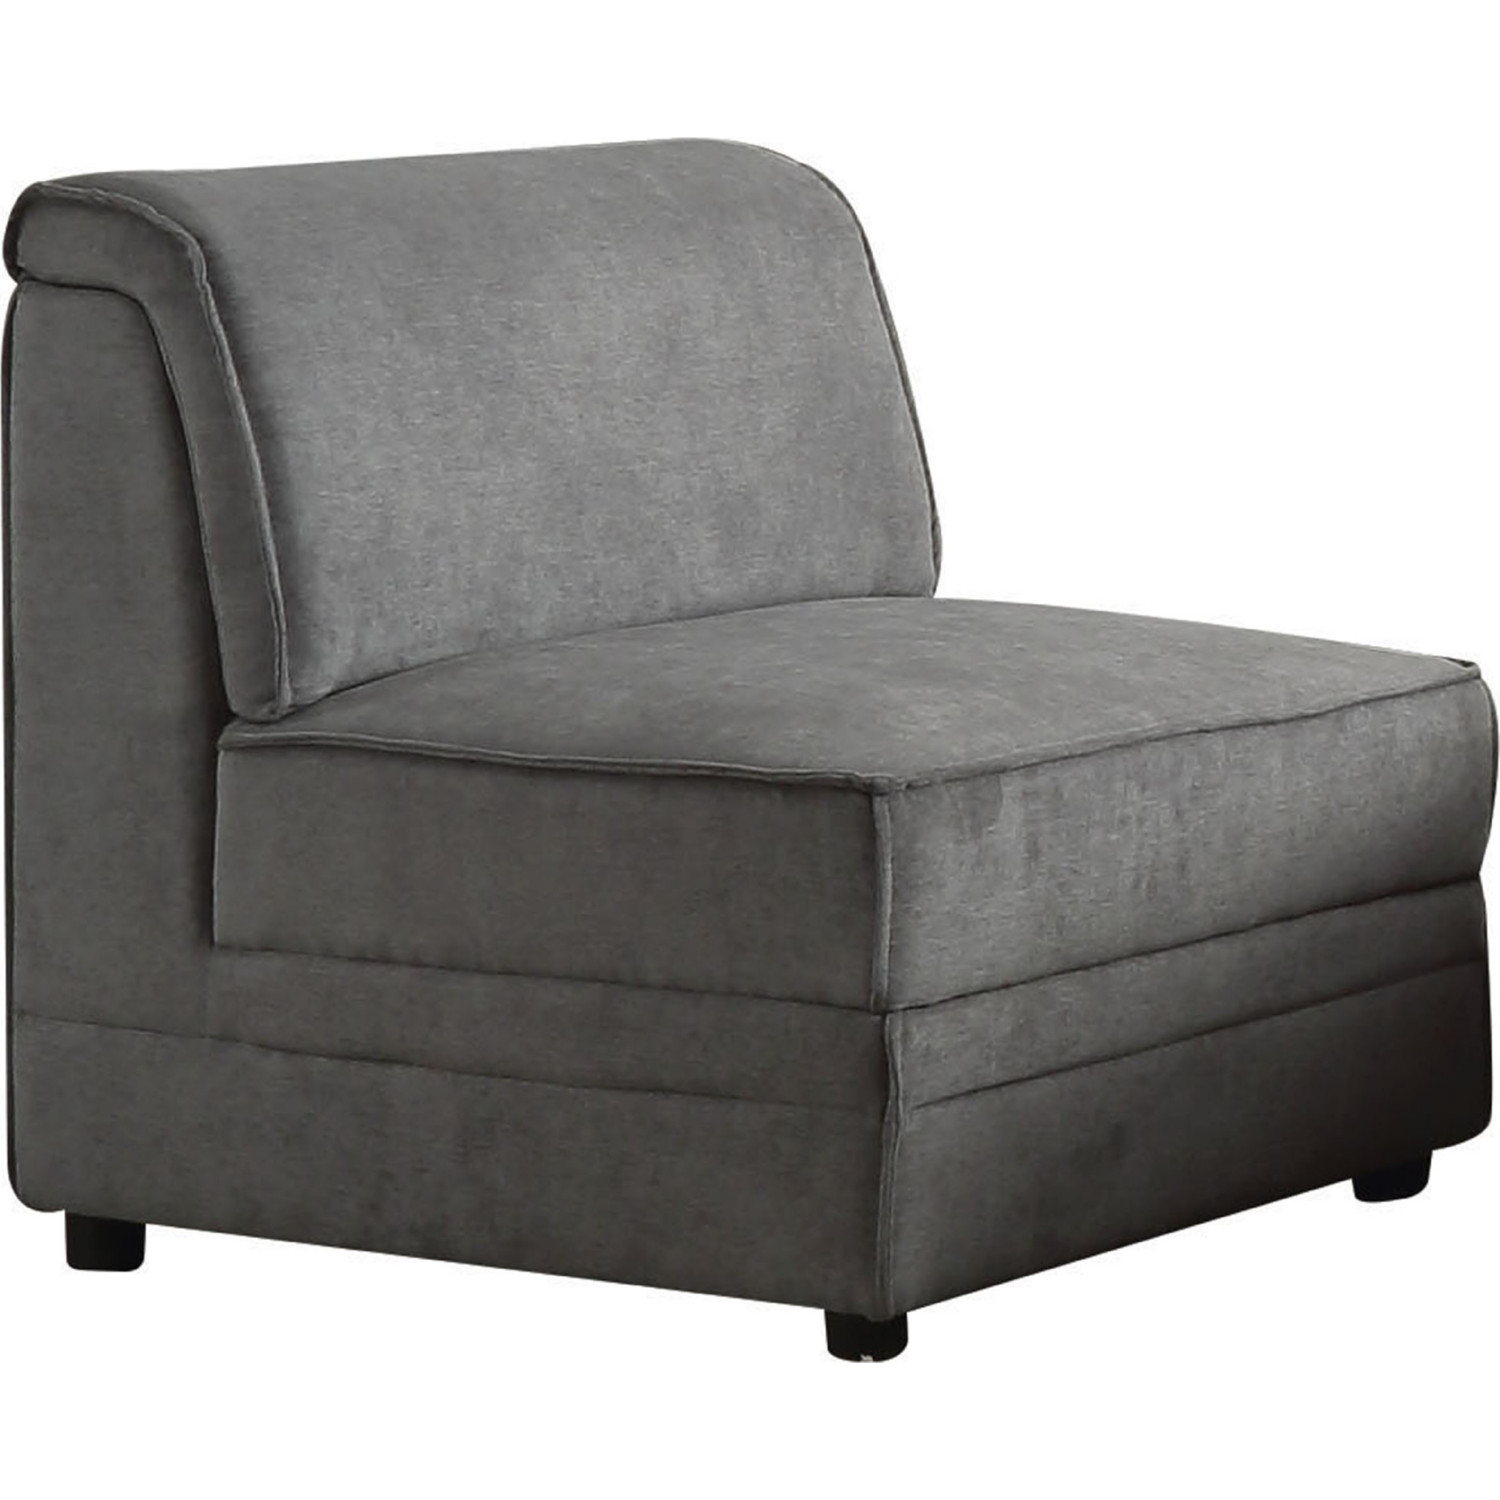 Acme 53780 Bois Modular Sectional Sofa